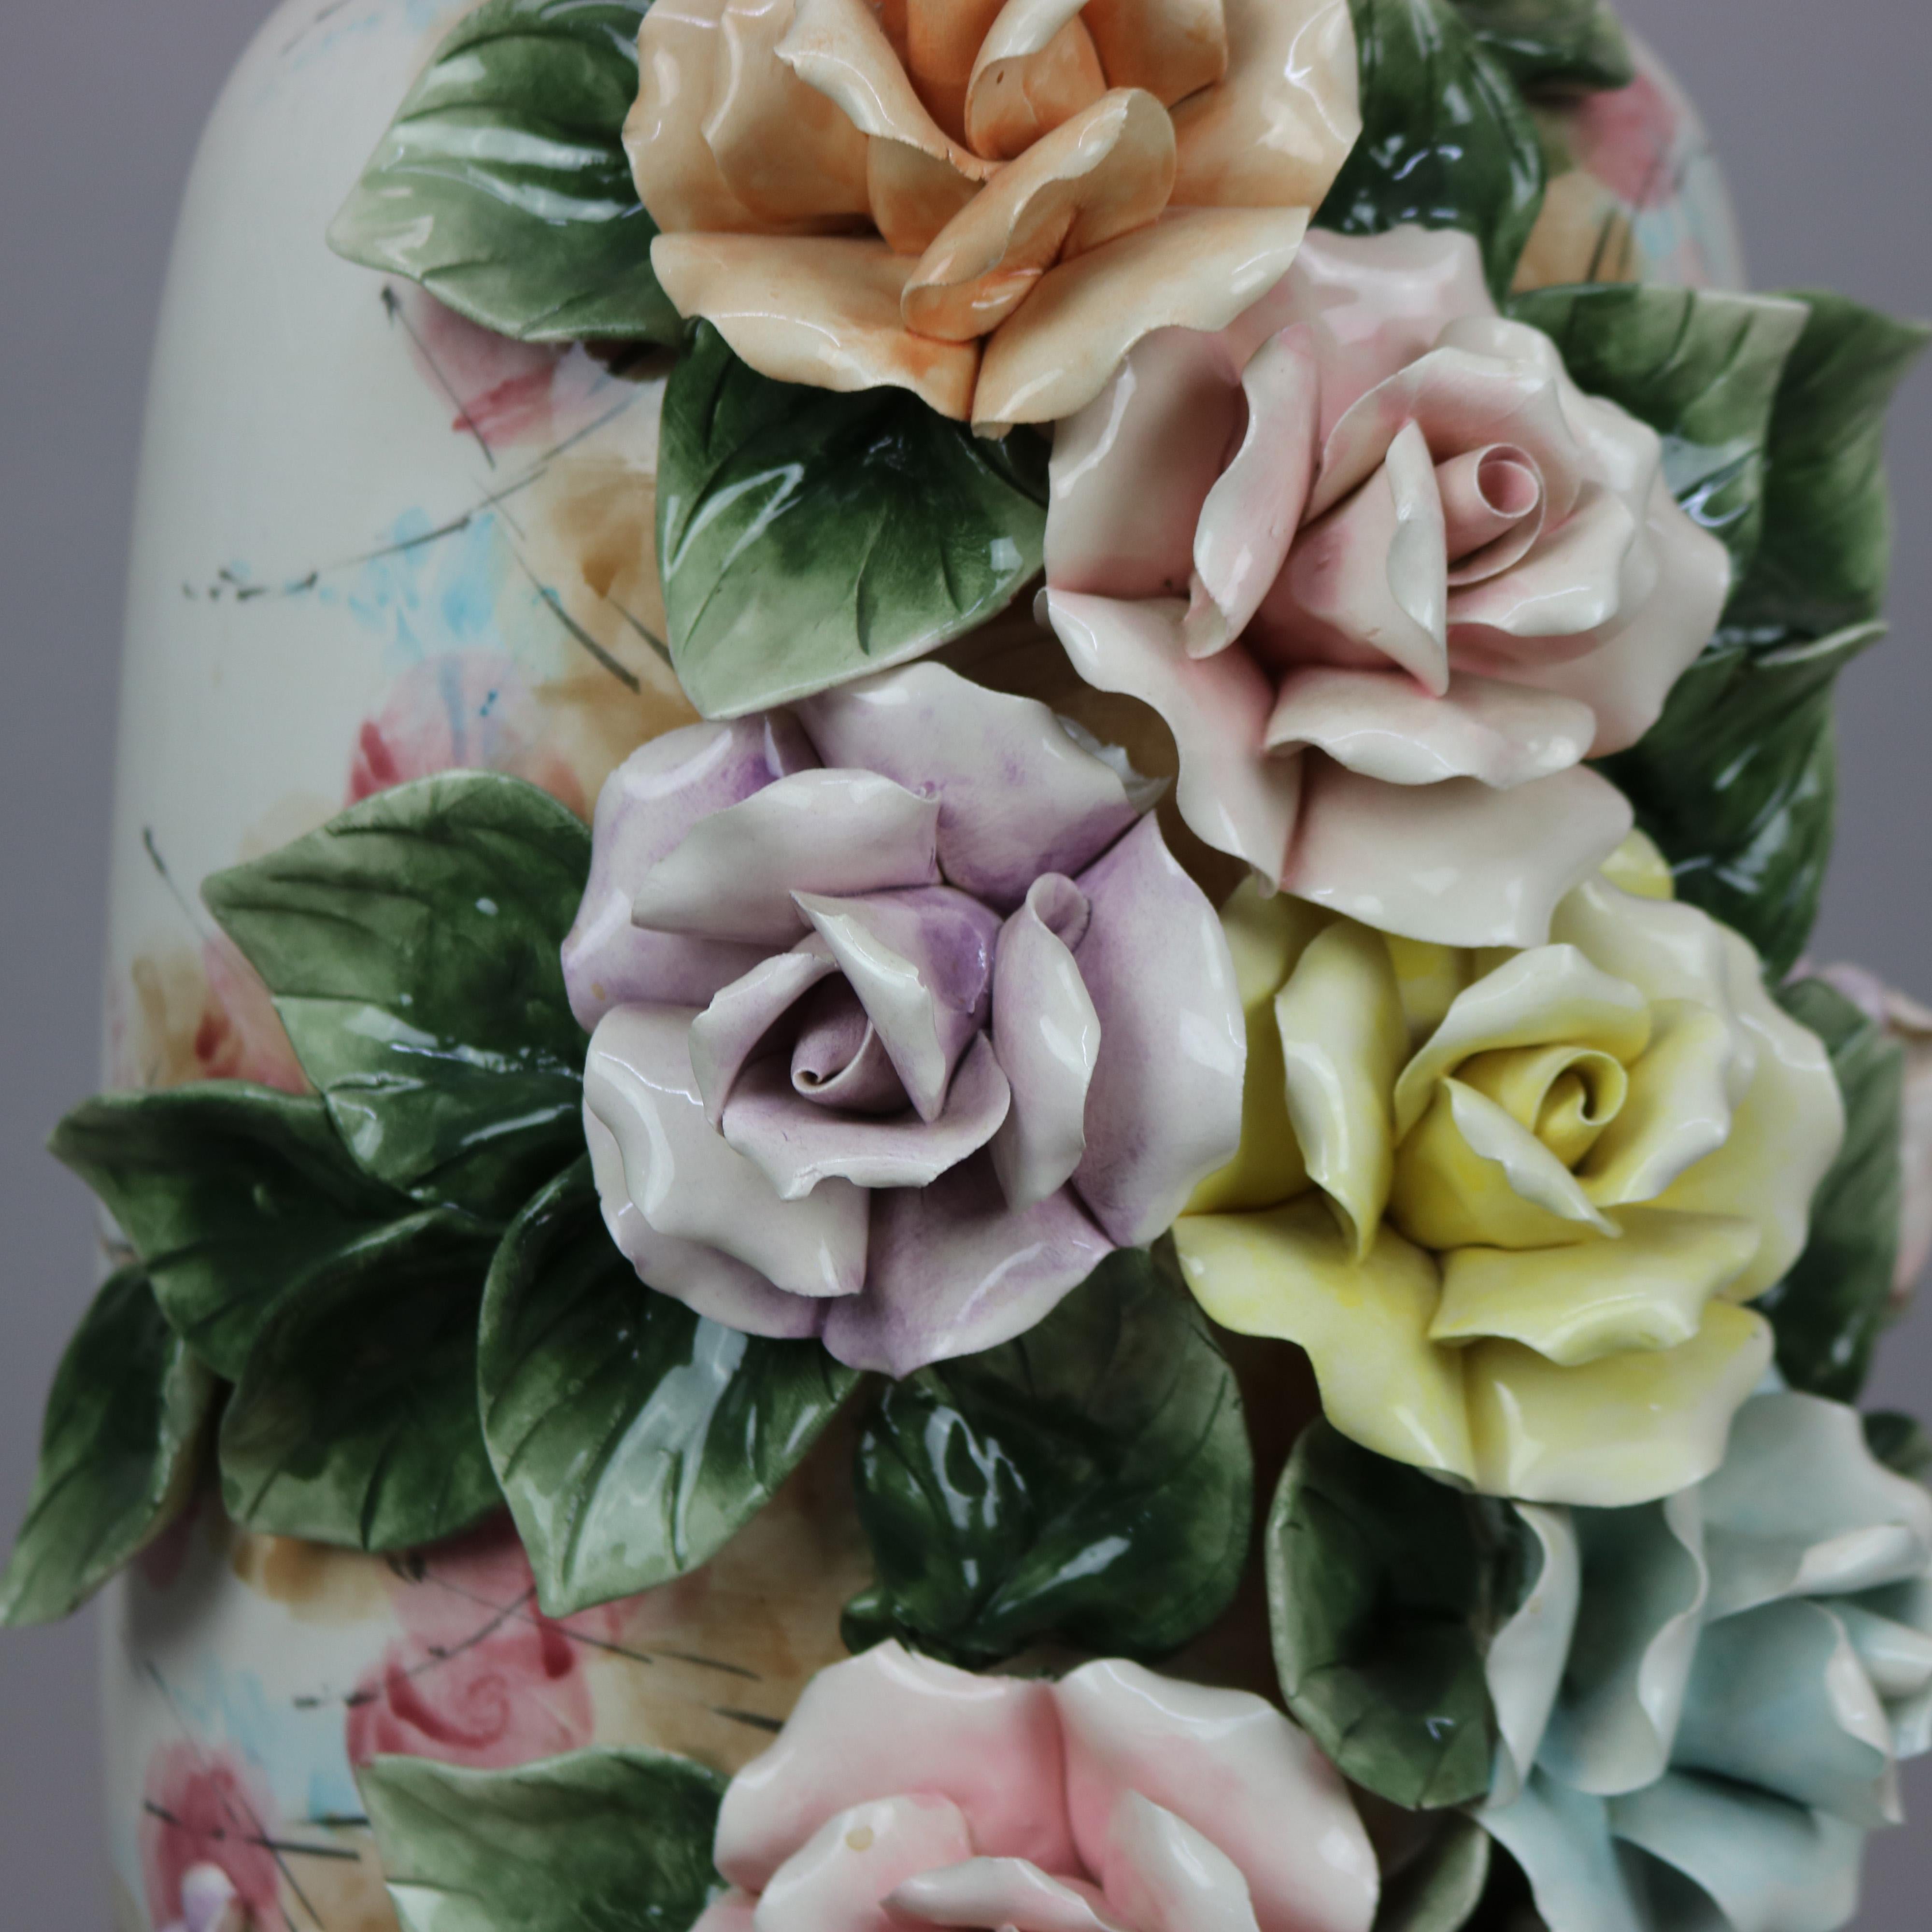 Antique Italian Capodimonte Pottery Floor Vase with Applied Flowers, c1900 For Sale 3